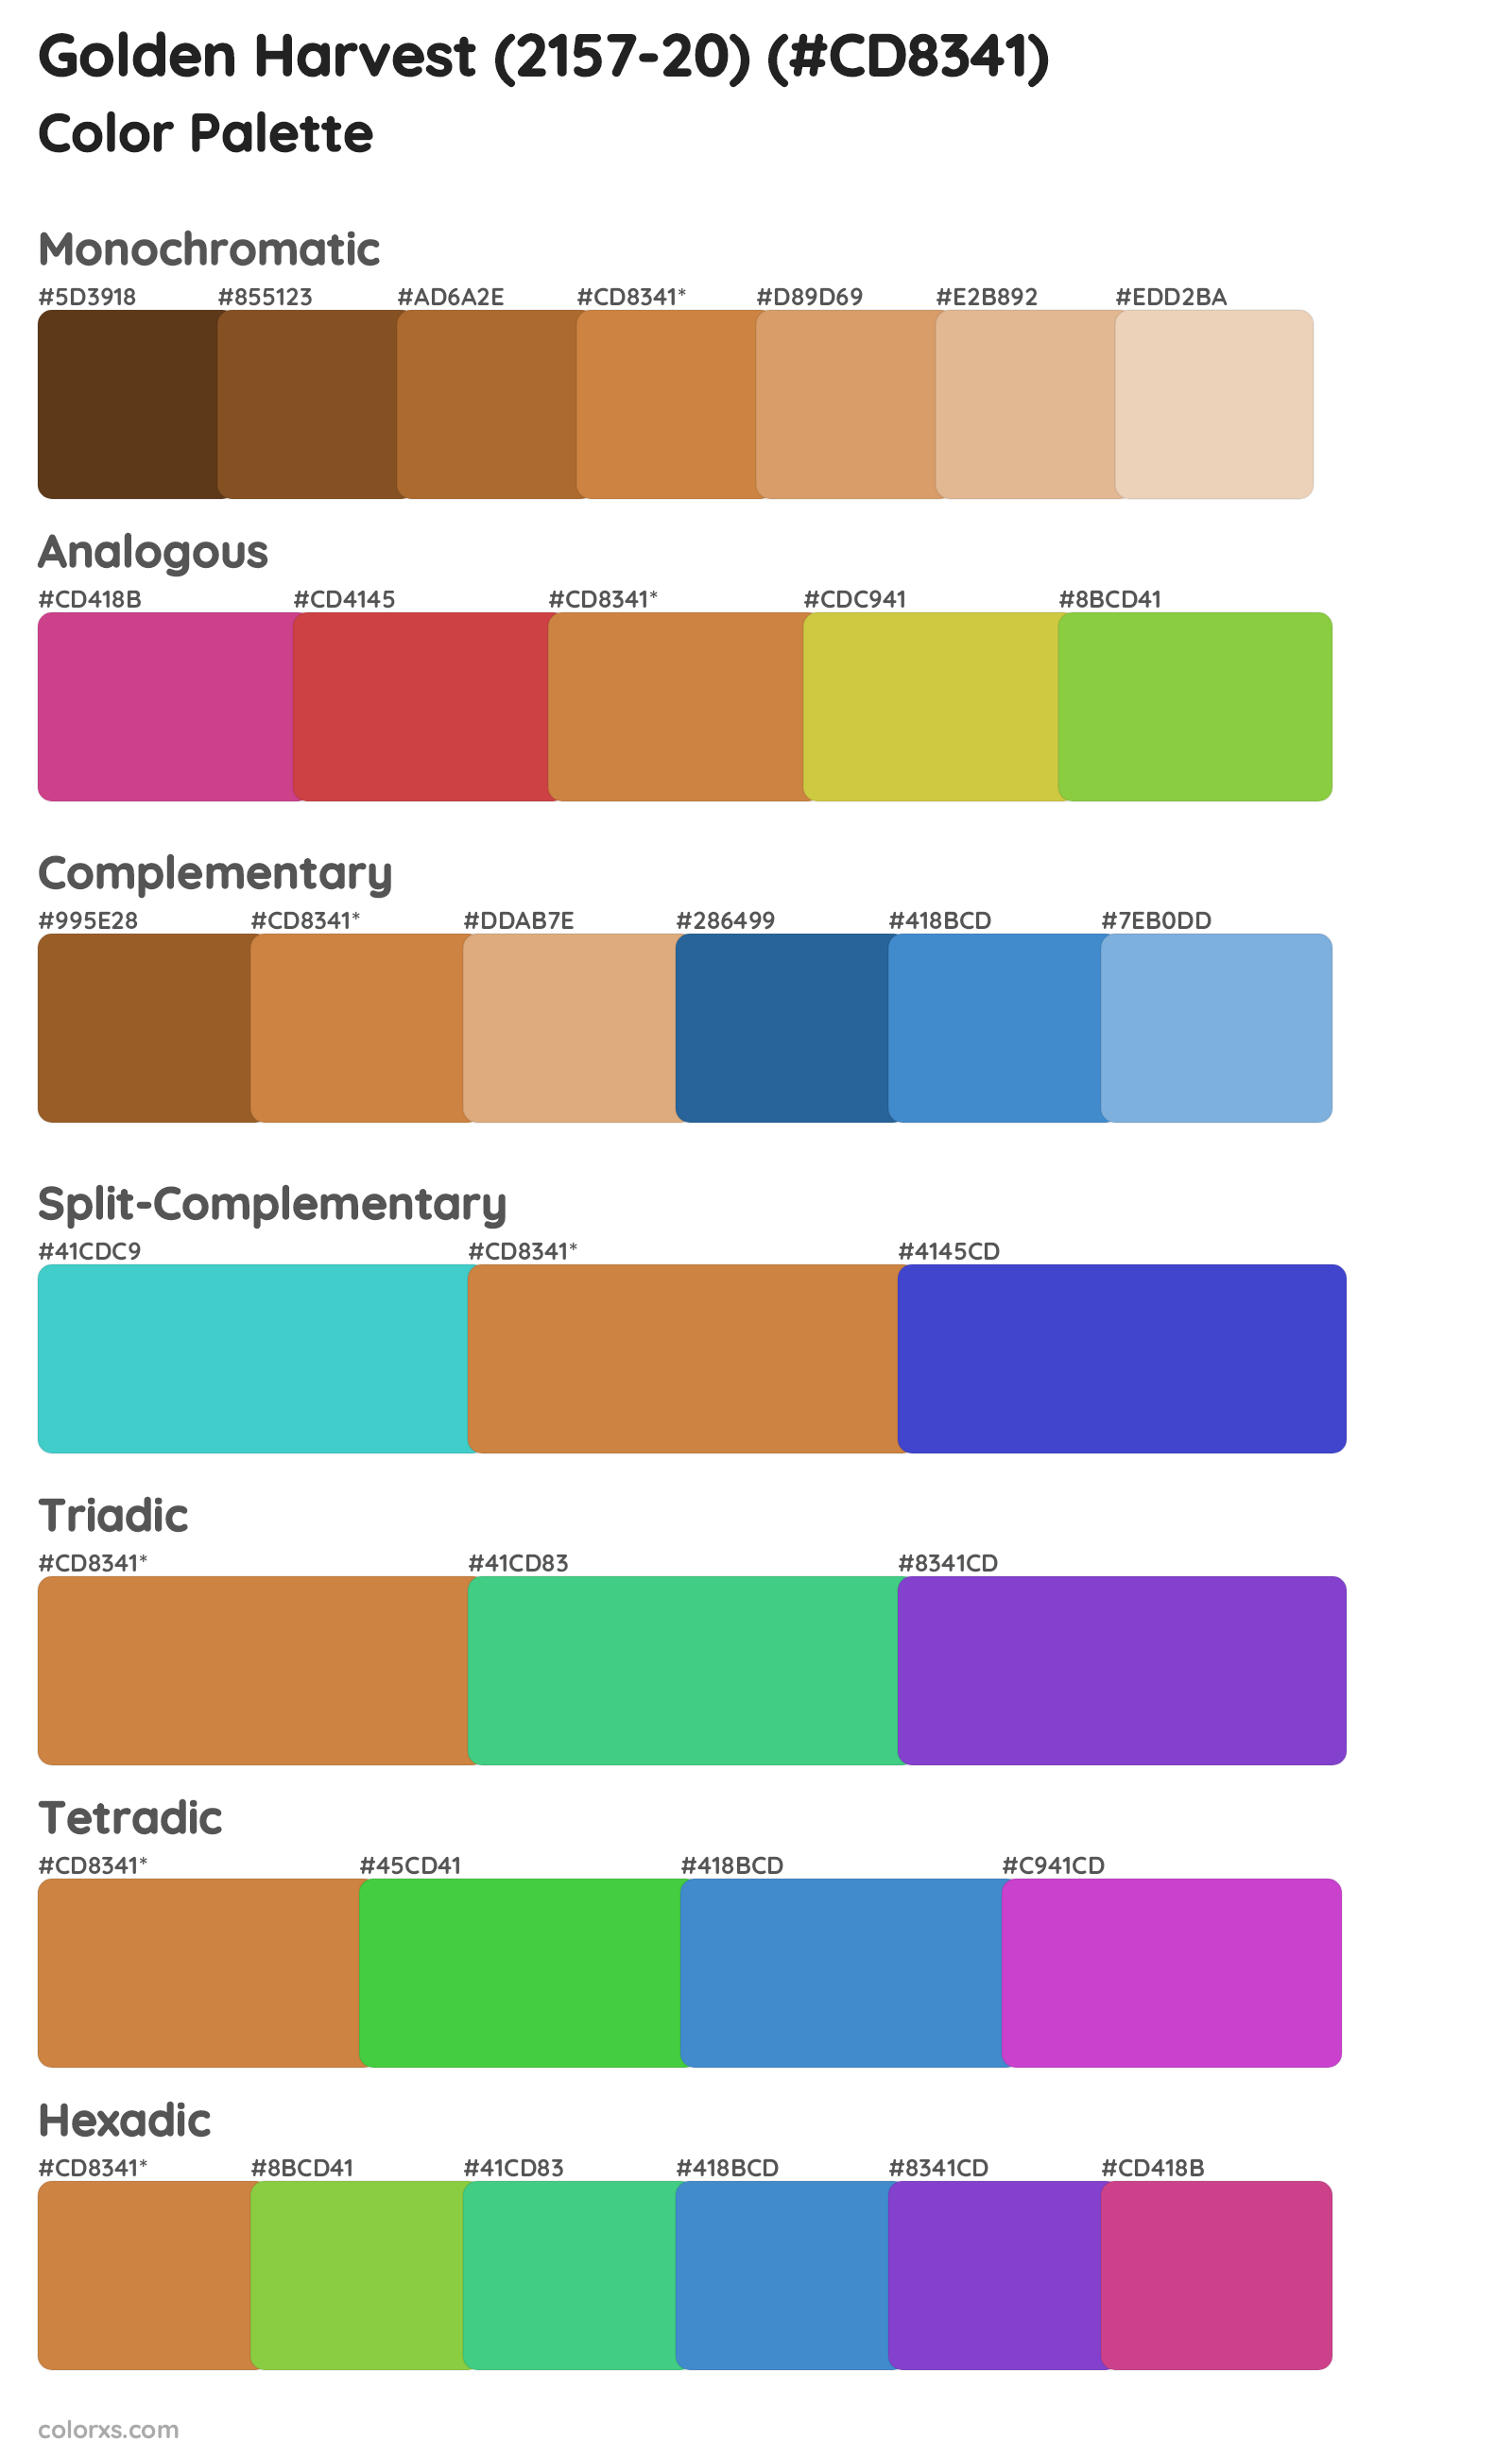 Golden Harvest (2157-20) Color Scheme Palettes